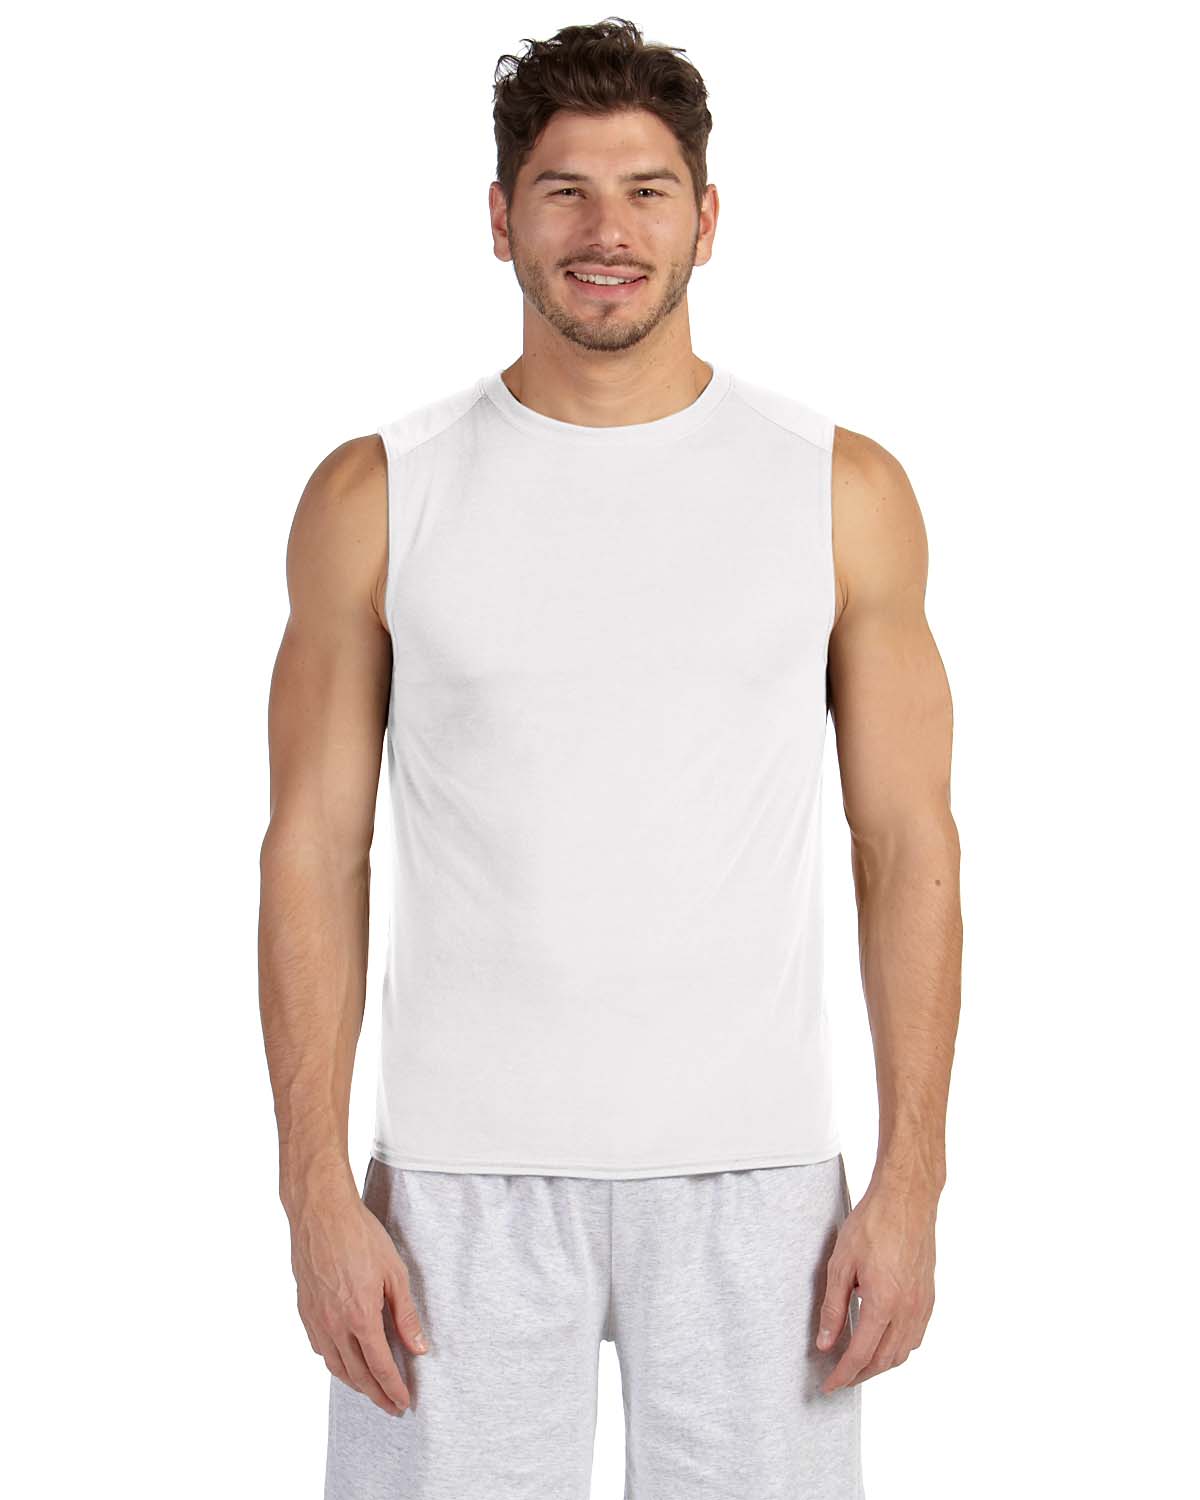 NEW Gildan Performance Dri-Fit Sleeveless Muscle T-Shirt Workout S-3XL ...